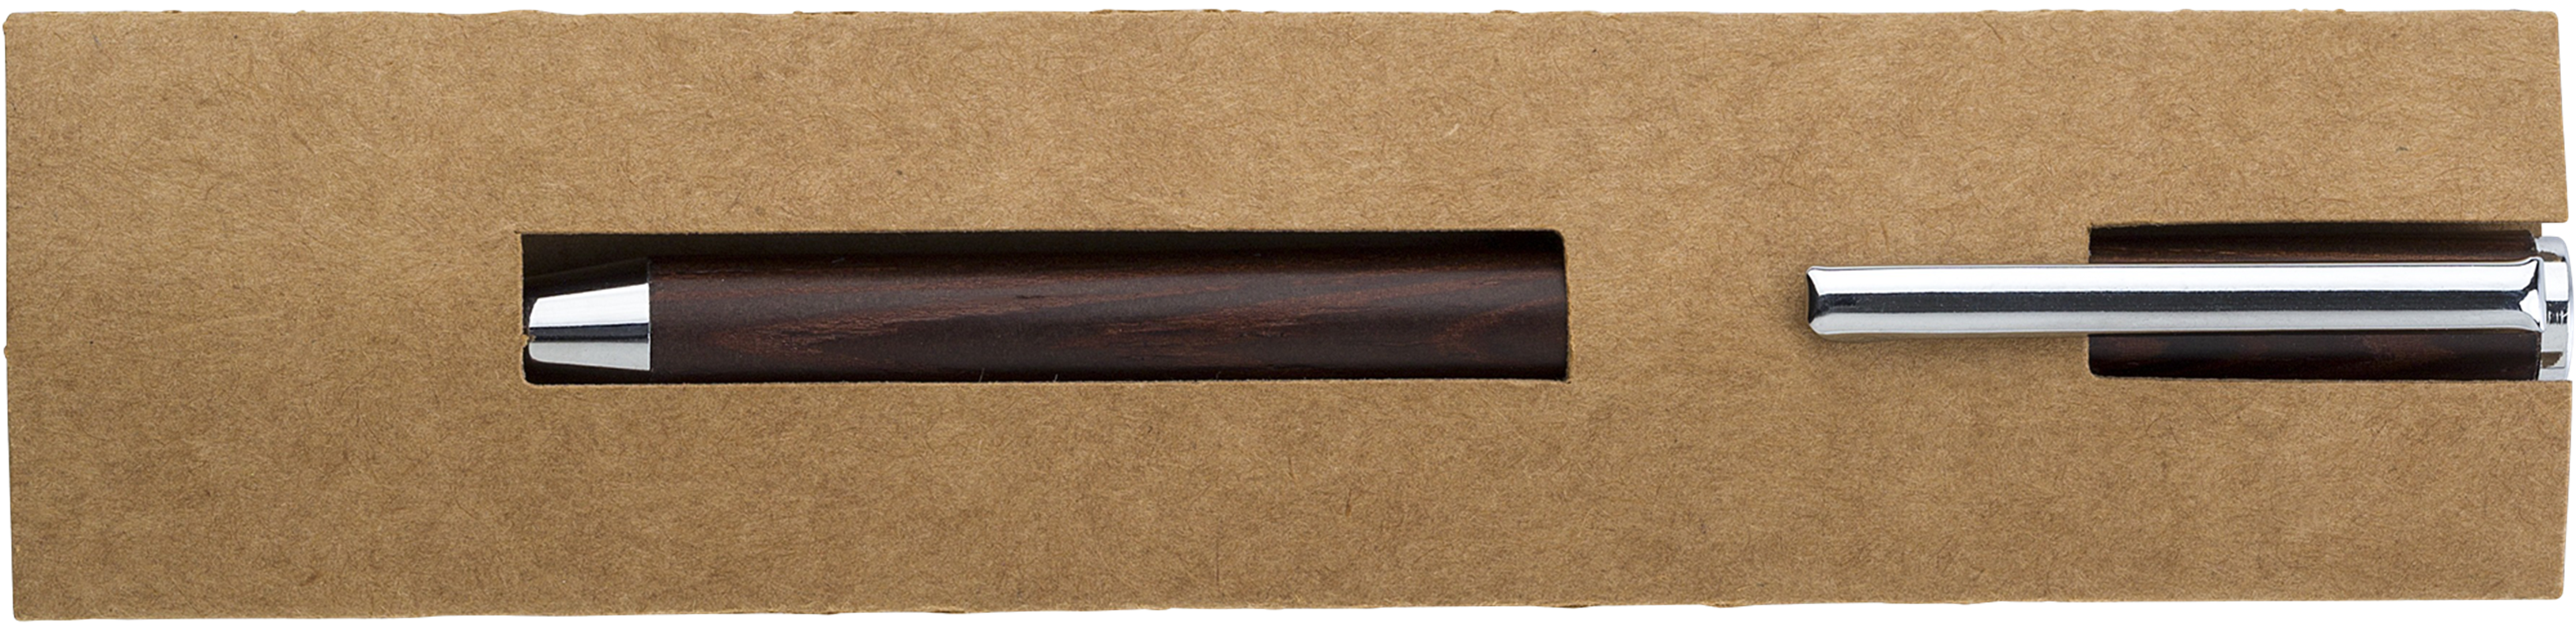 Blackwood wooden ballpen 865014_011 (Brown)